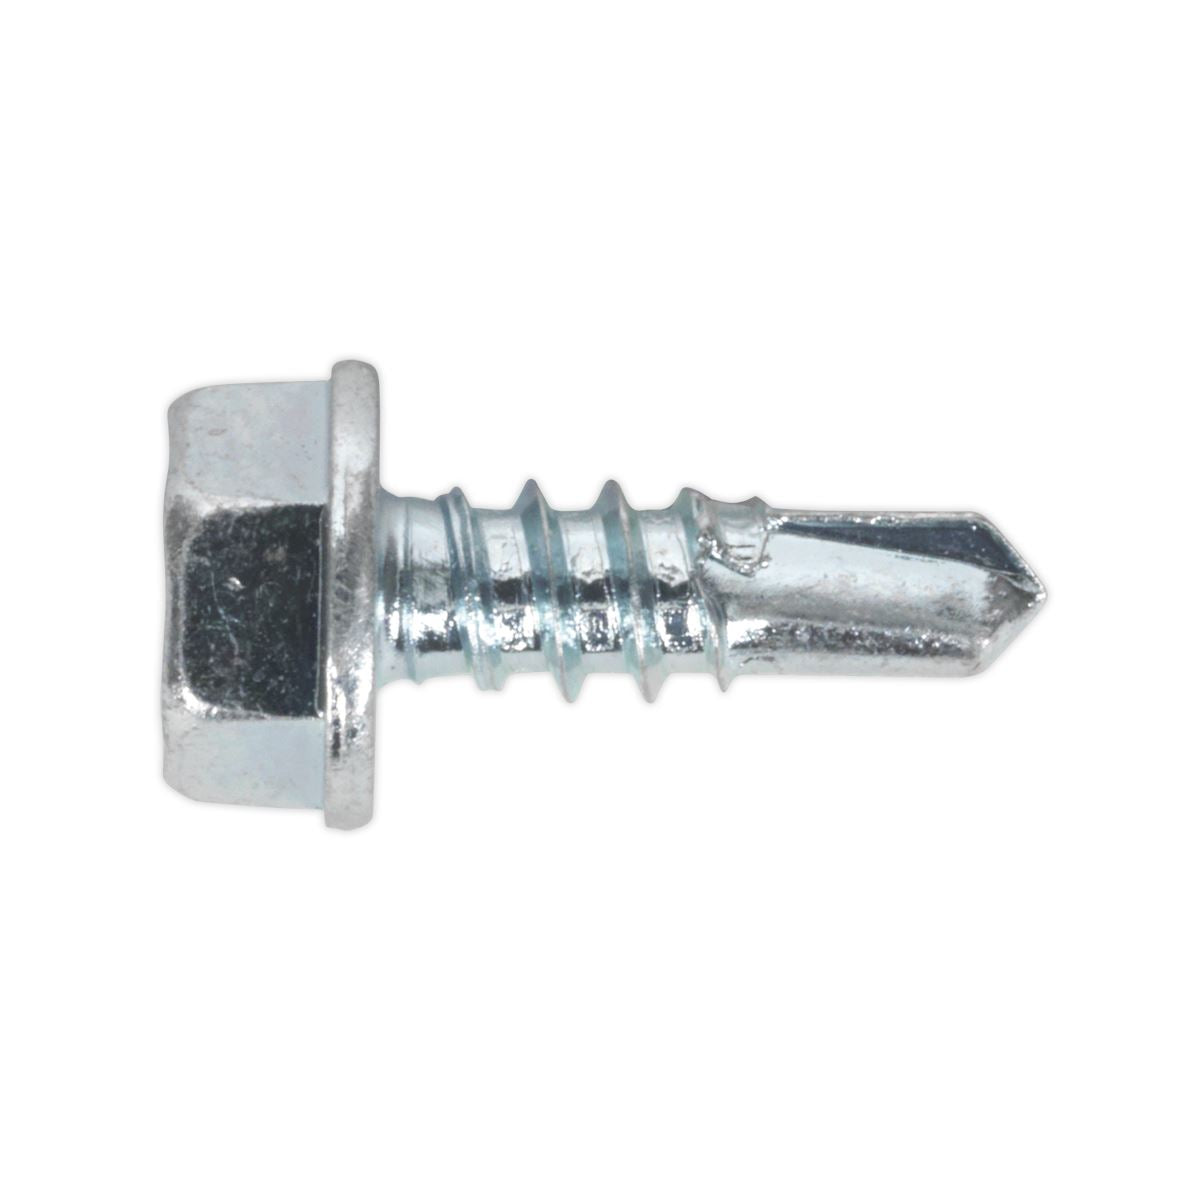 Sealey Self-Drilling Screw 4.2 x 13mm Hex Head Zinc Pack of 100